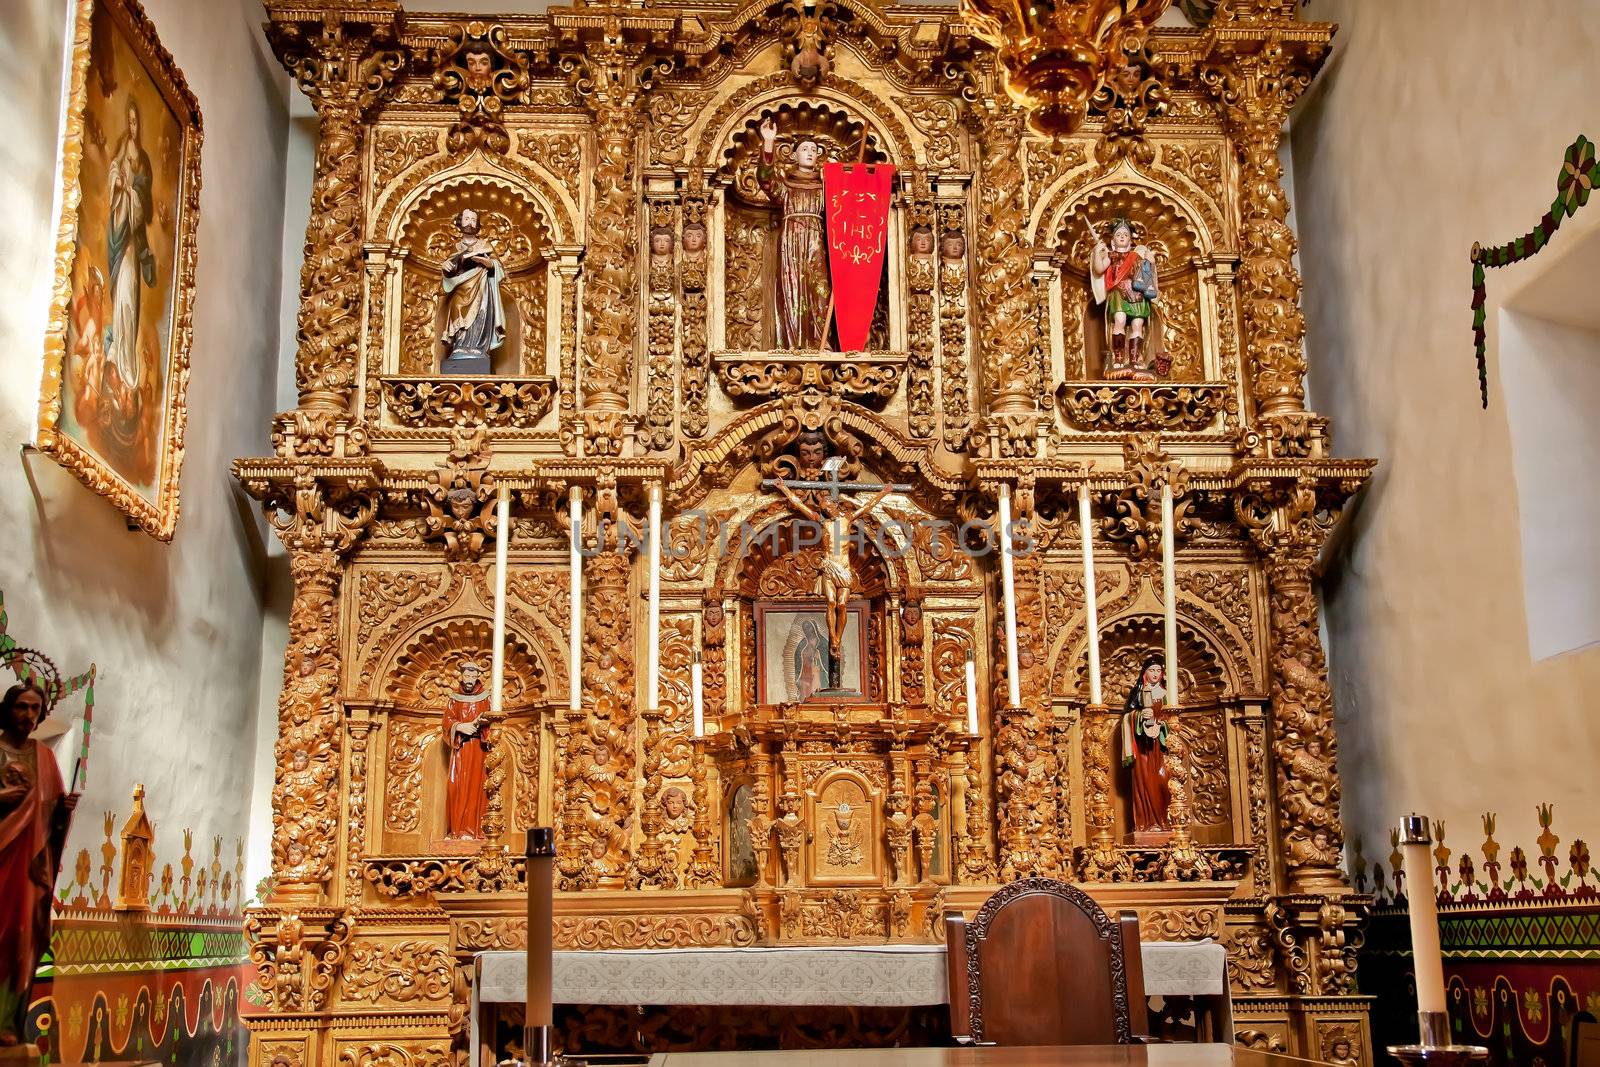 Spanish Ornate Altar Serra Chapel Mission San Juan Capistrano Ca by bill_perry